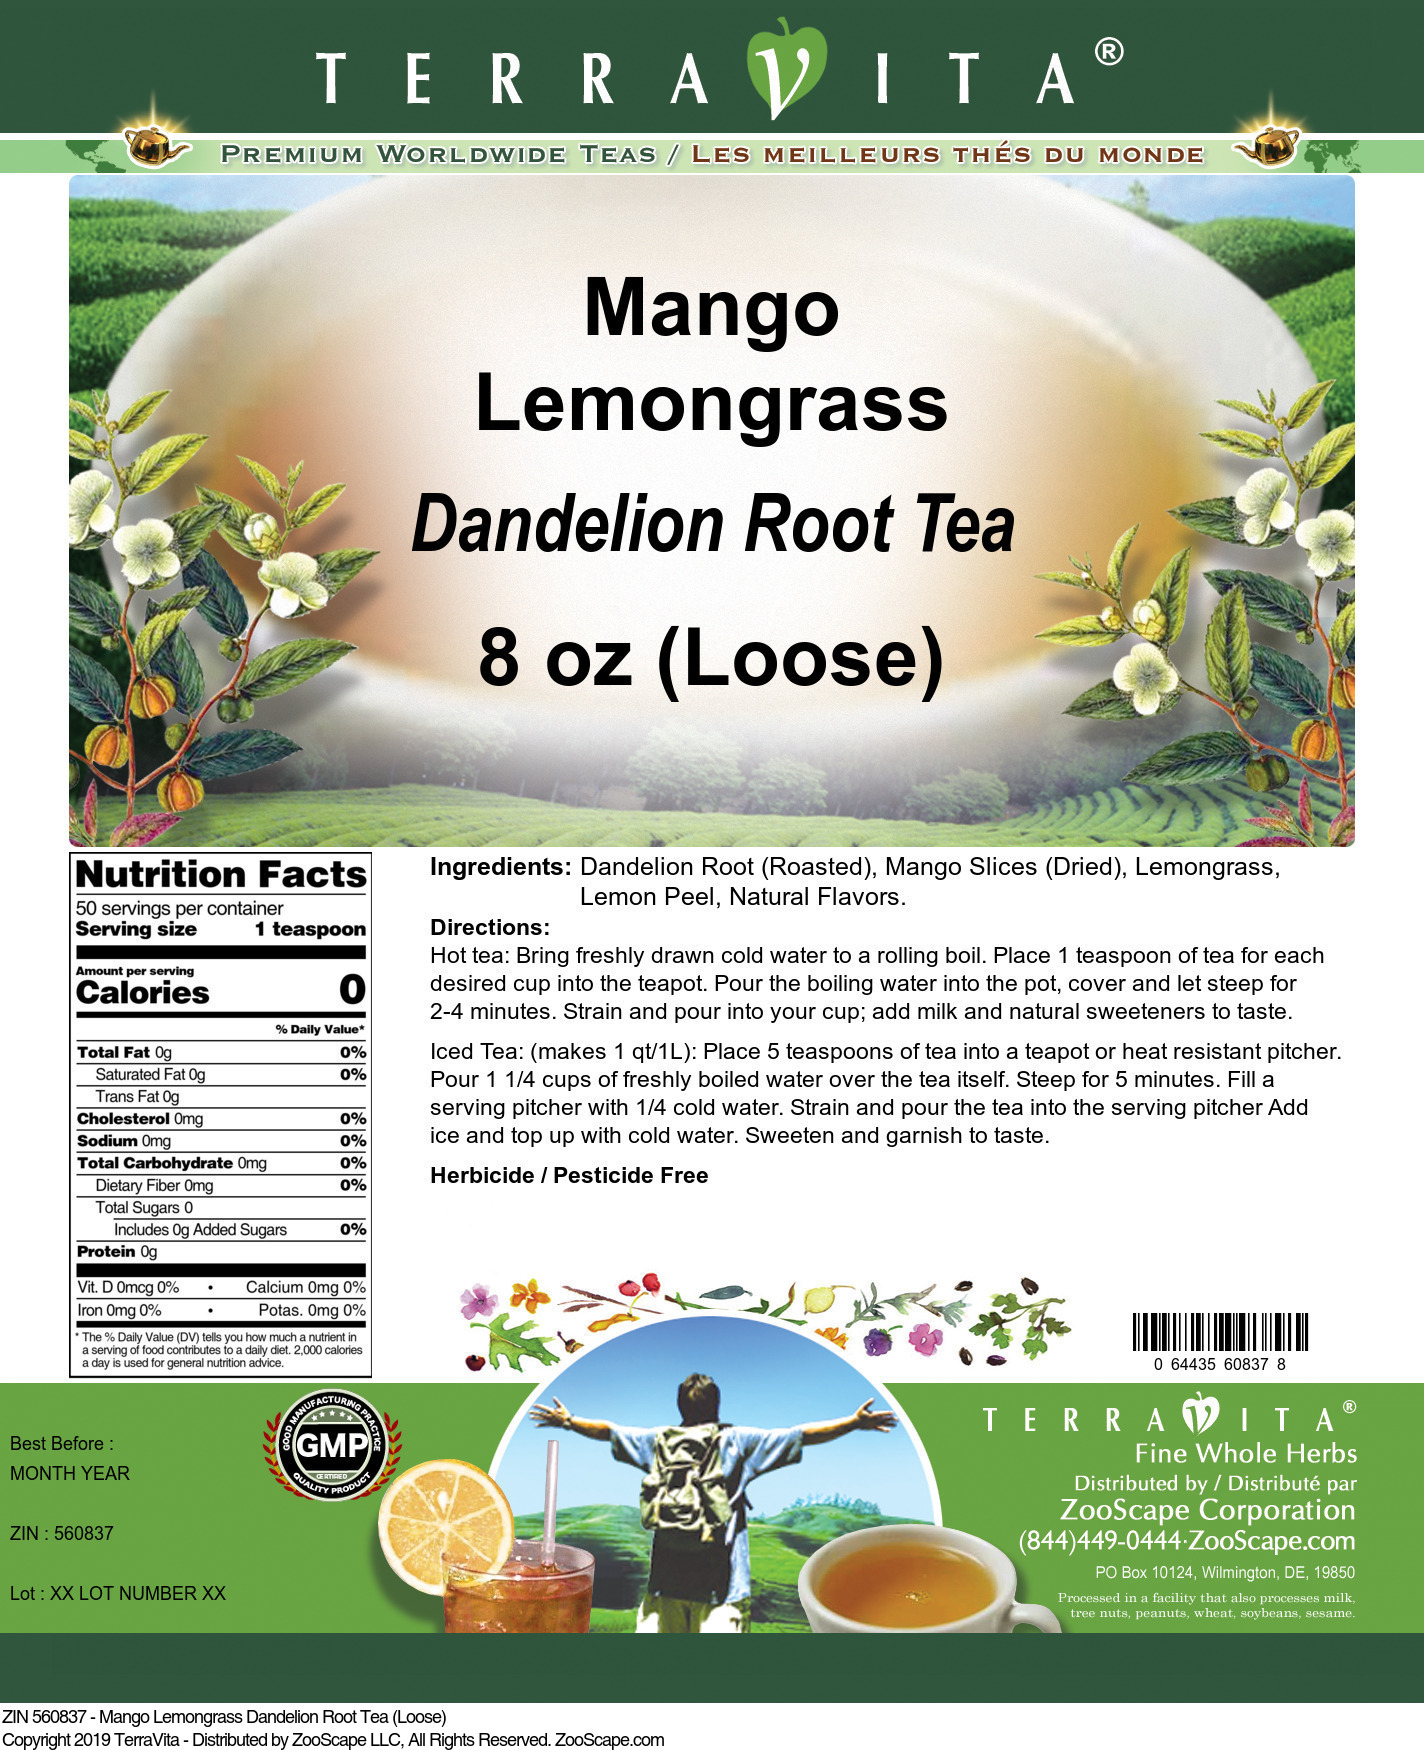 Mango Lemongrass Dandelion Root Tea (Loose) - Label